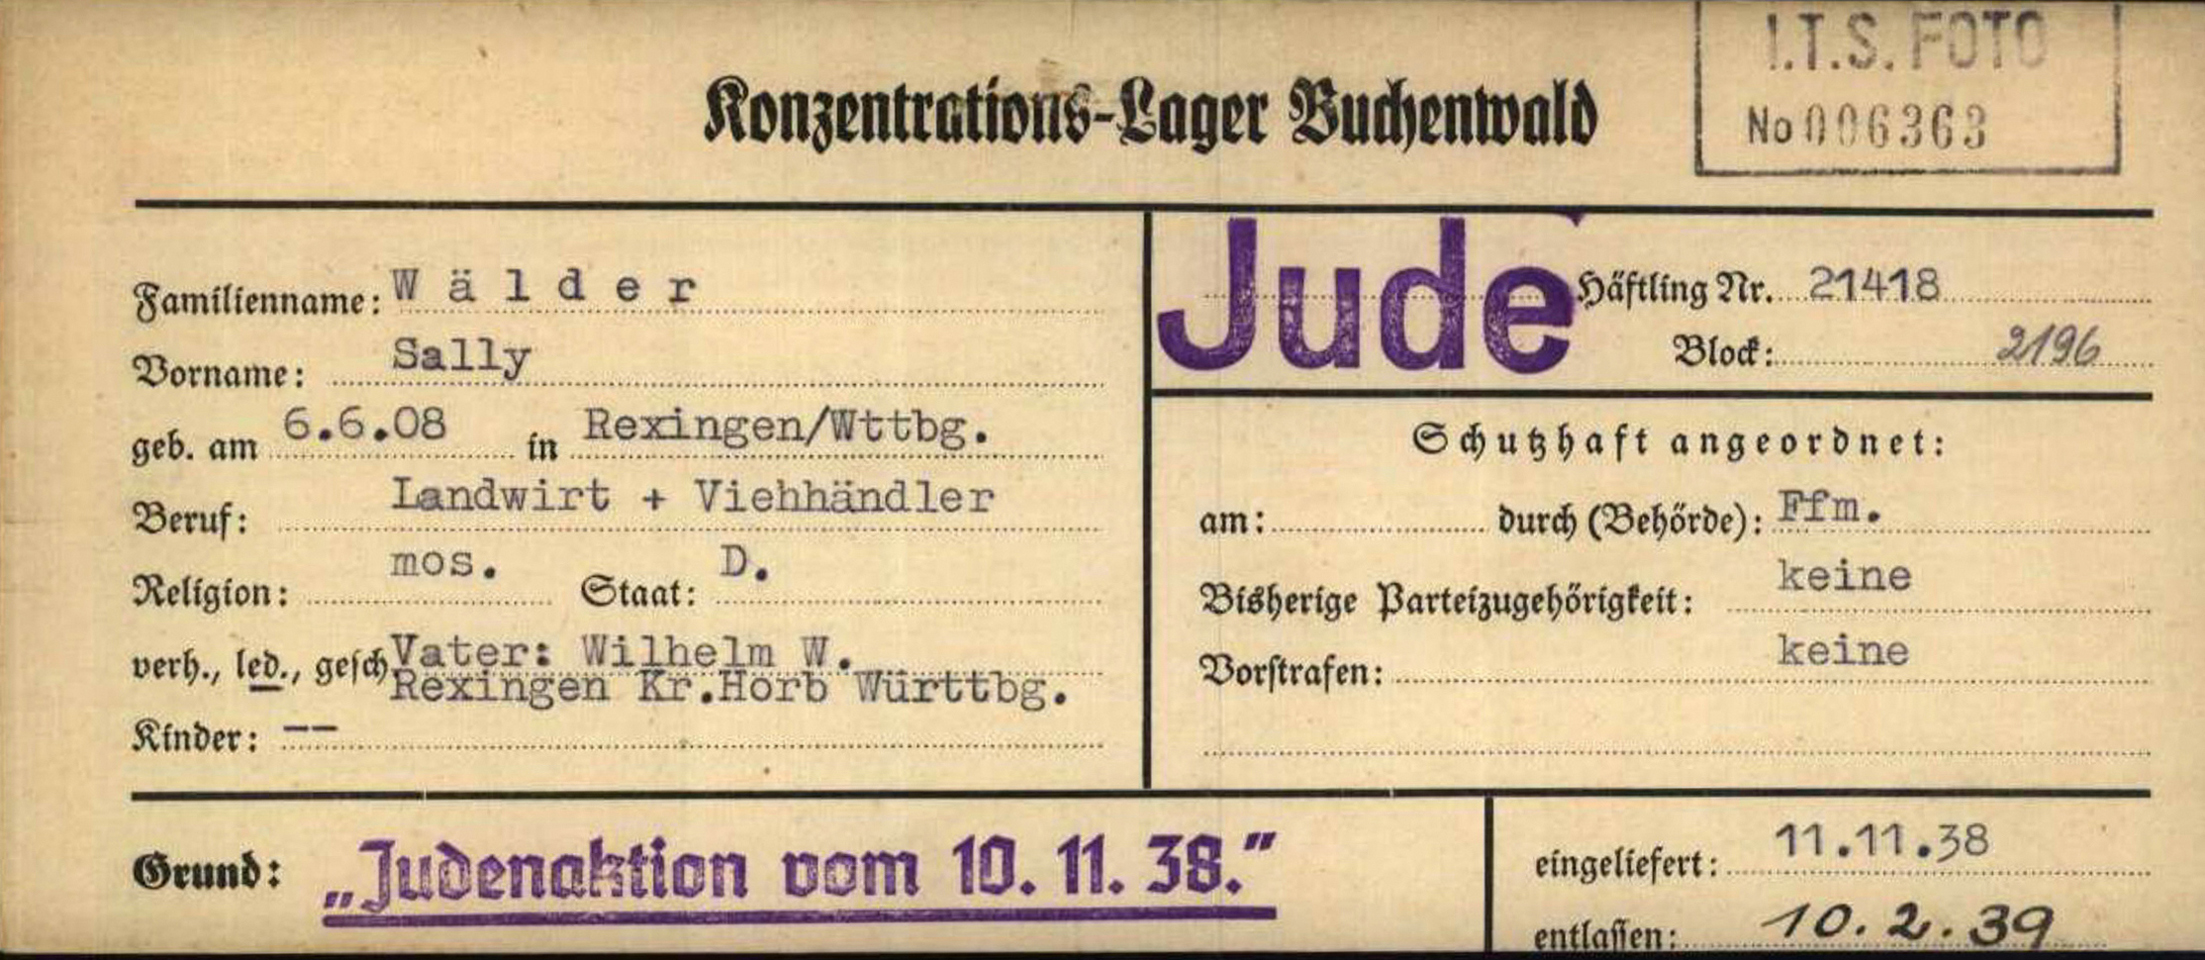 Dachau concentration camp registration card of Sally Wälder.